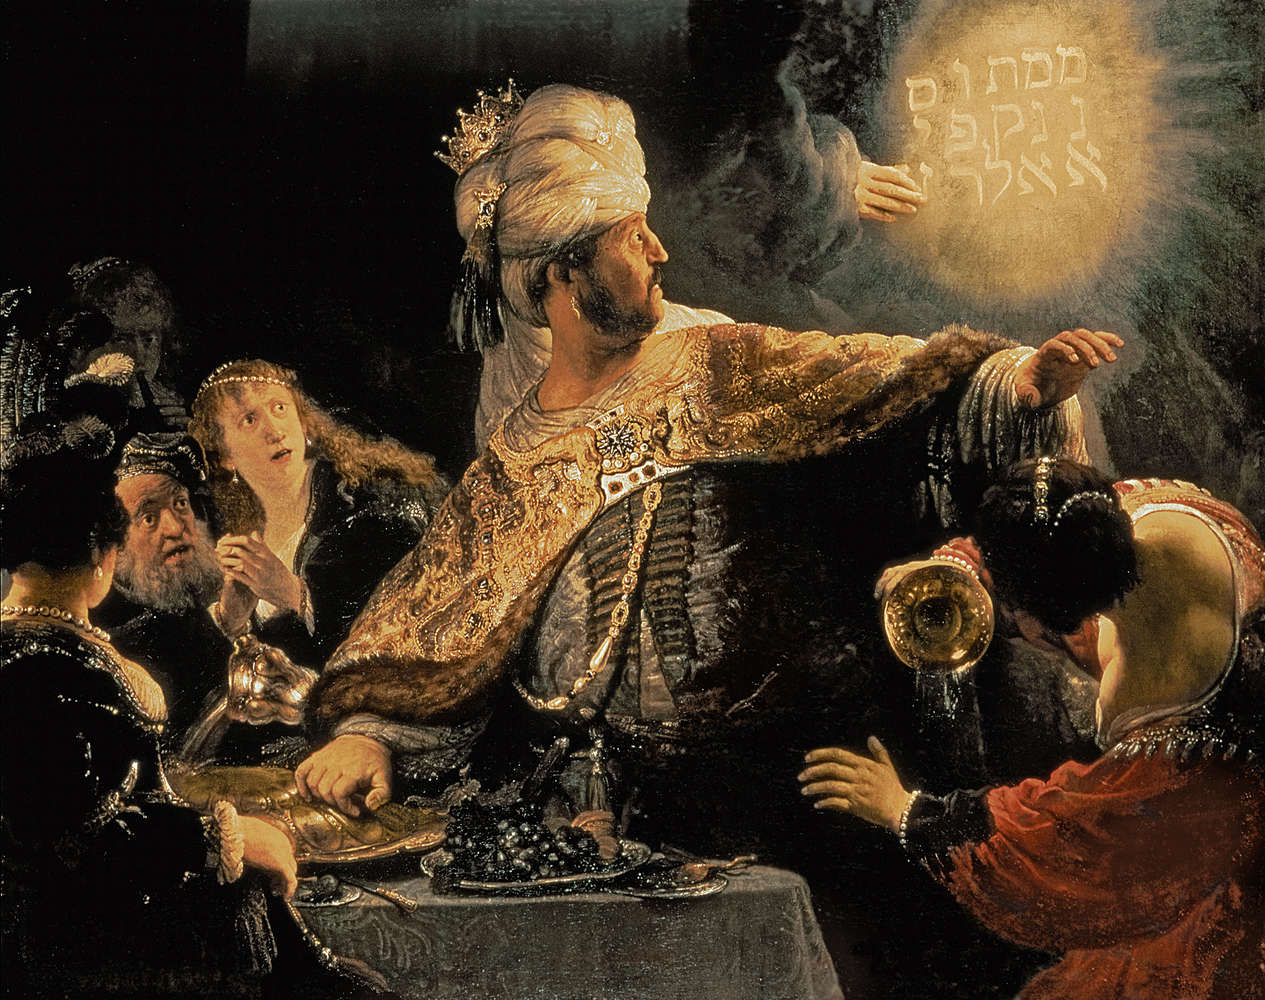             Photo wallpaper "Belshazzar's Feast" by Rembrandt van Rijn
        